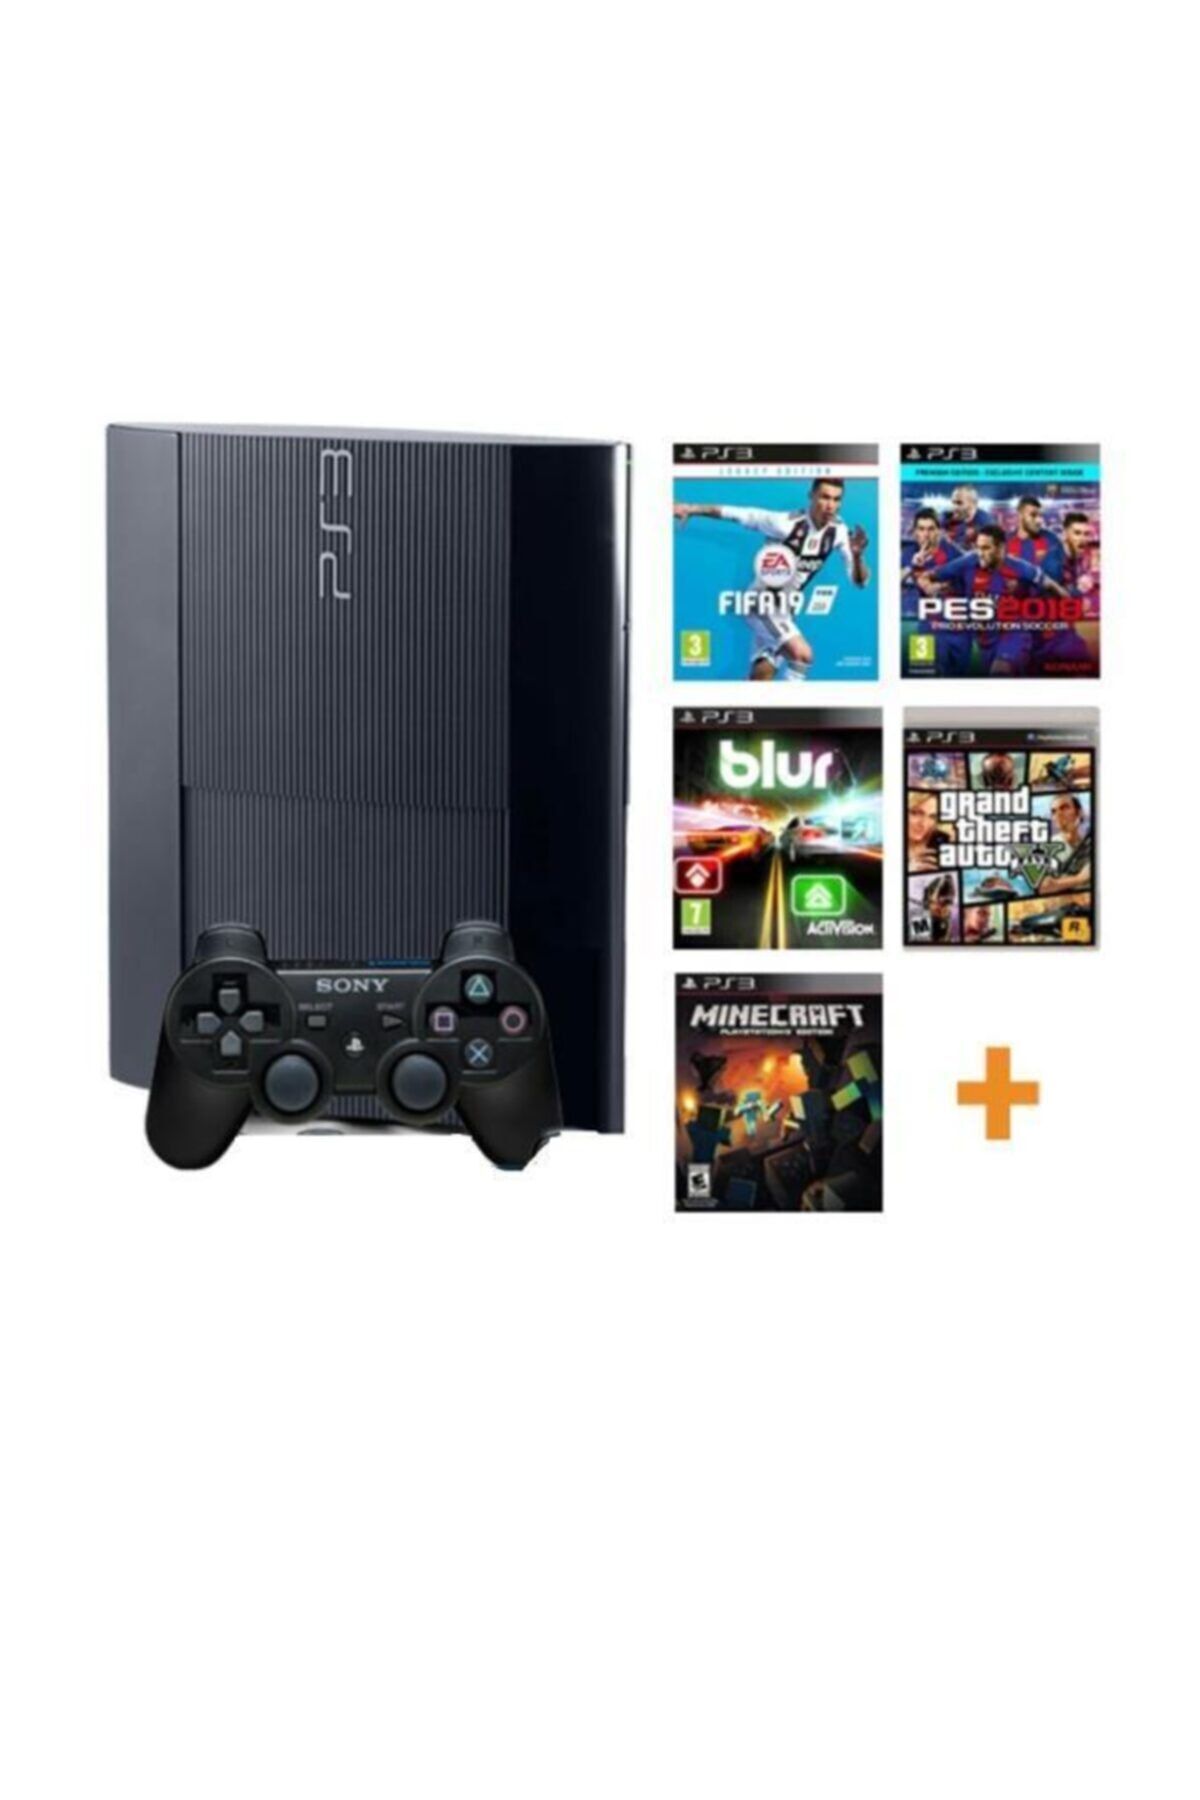 Sony Playstation 3 Super Slim 500 Gb ve 1 Kol ve 40 Oyun